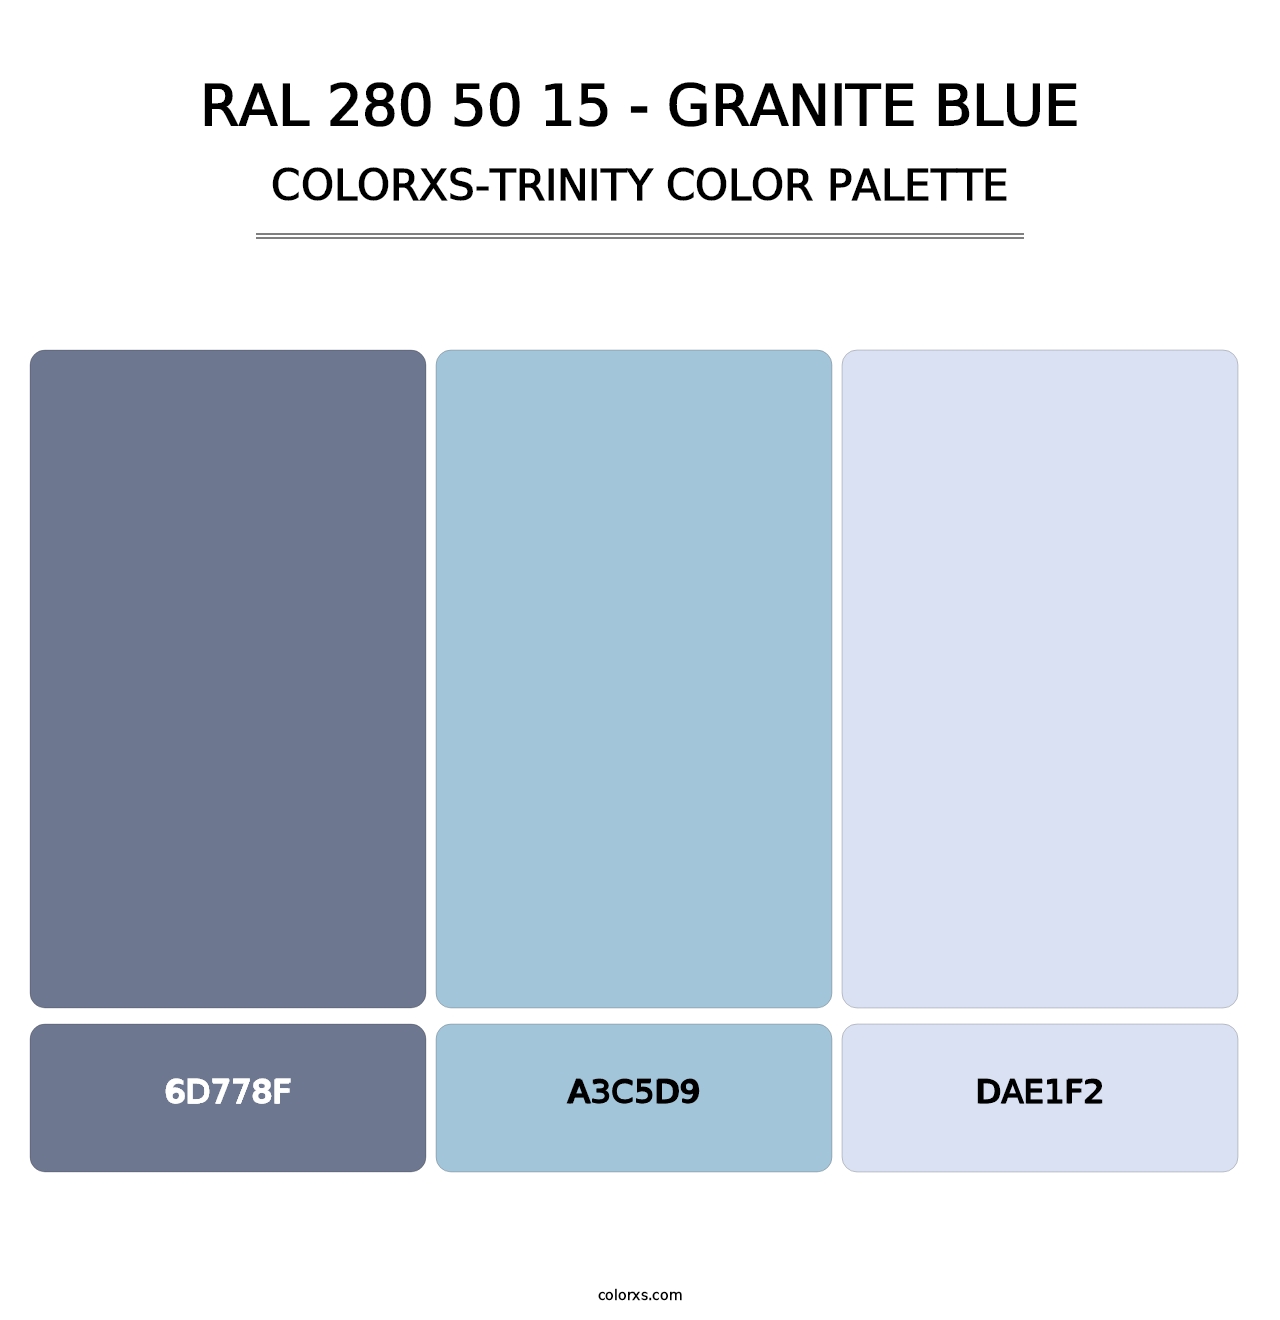 RAL 280 50 15 - Granite Blue - Colorxs Trinity Palette